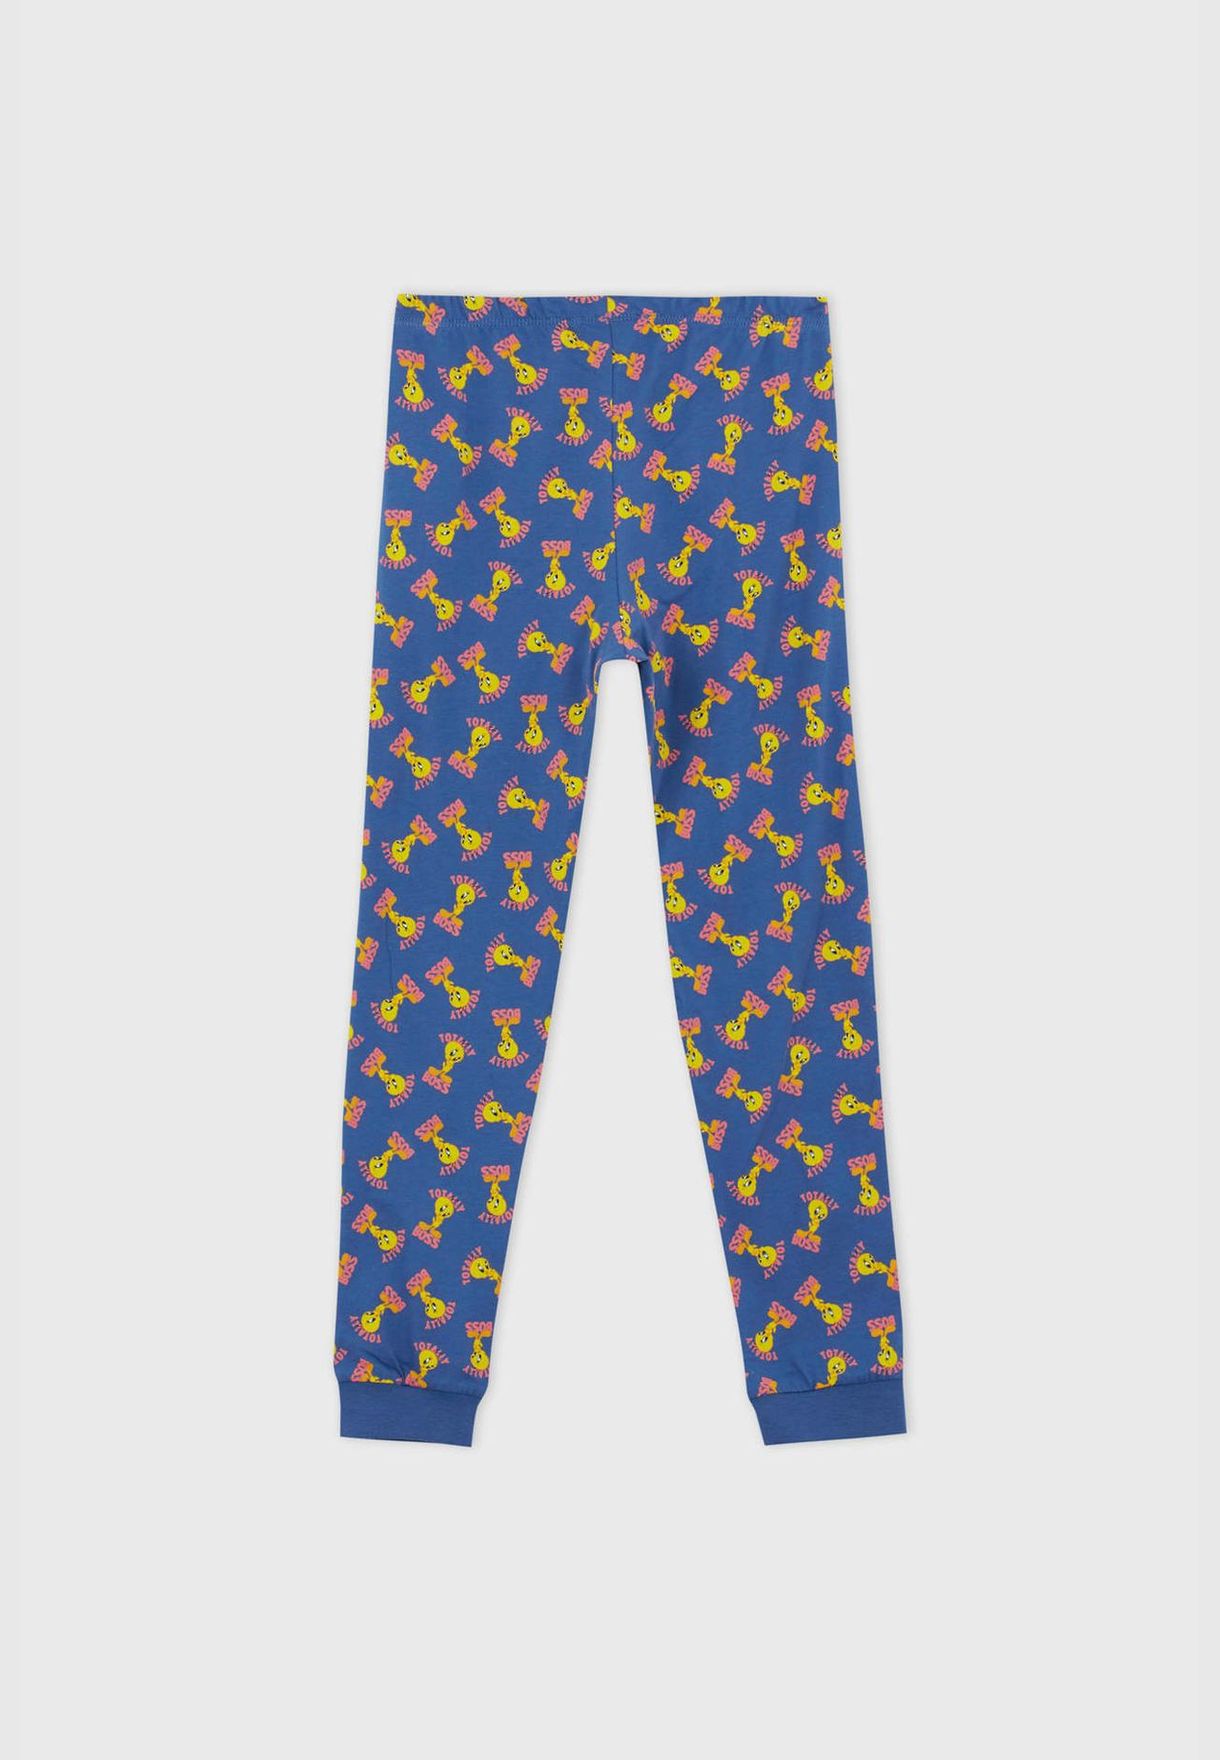 2 Pack Girl Looney Tunes Licenced Long Sleeve Knitted Pyjamas